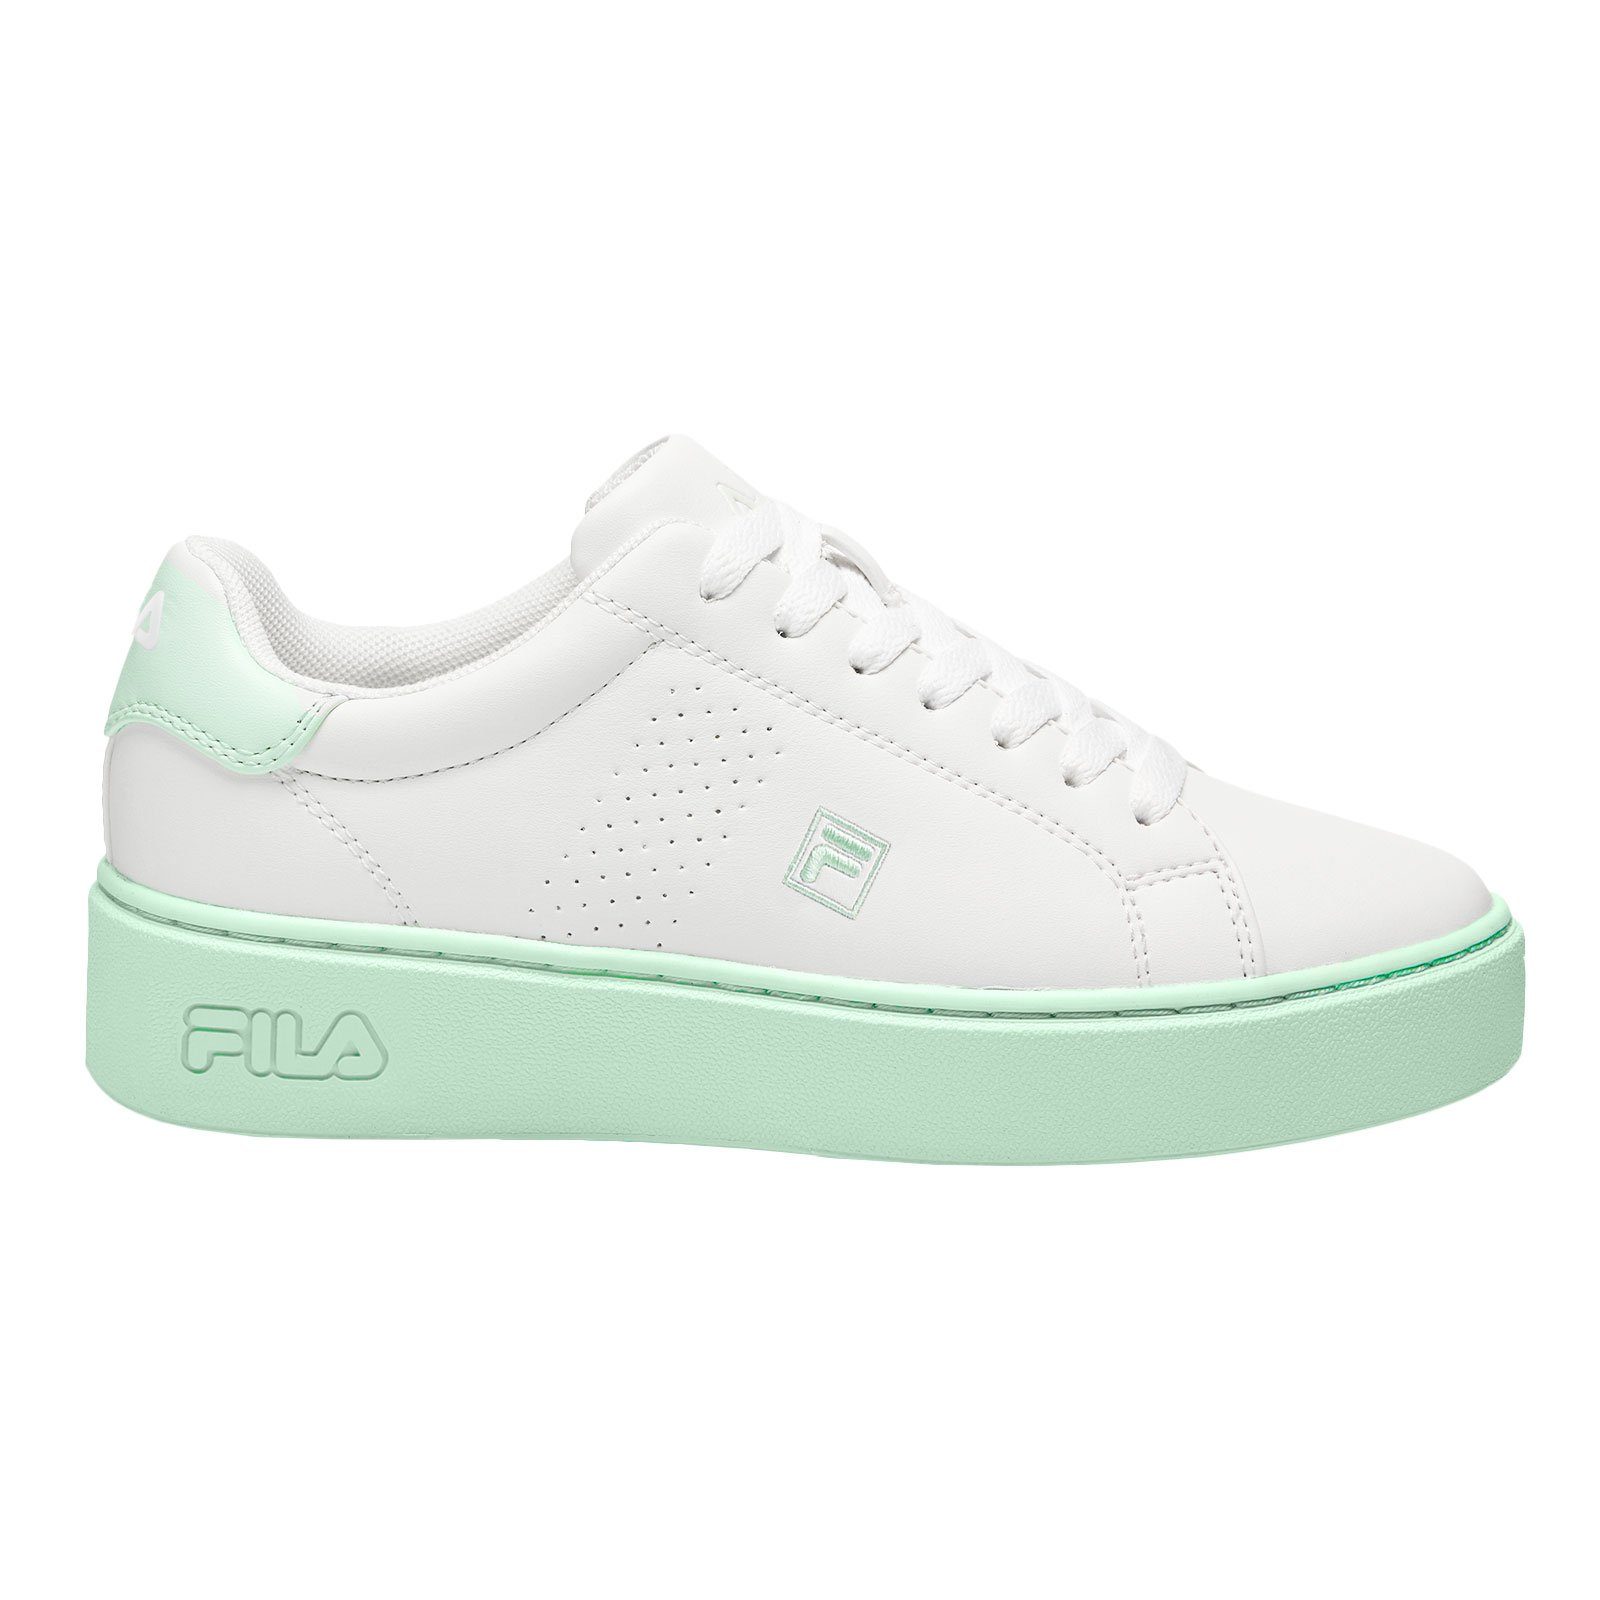 Fila Damen Sneaker mit Plateausohle und Akzenten in zarten Pastellfarben 94W white / bay